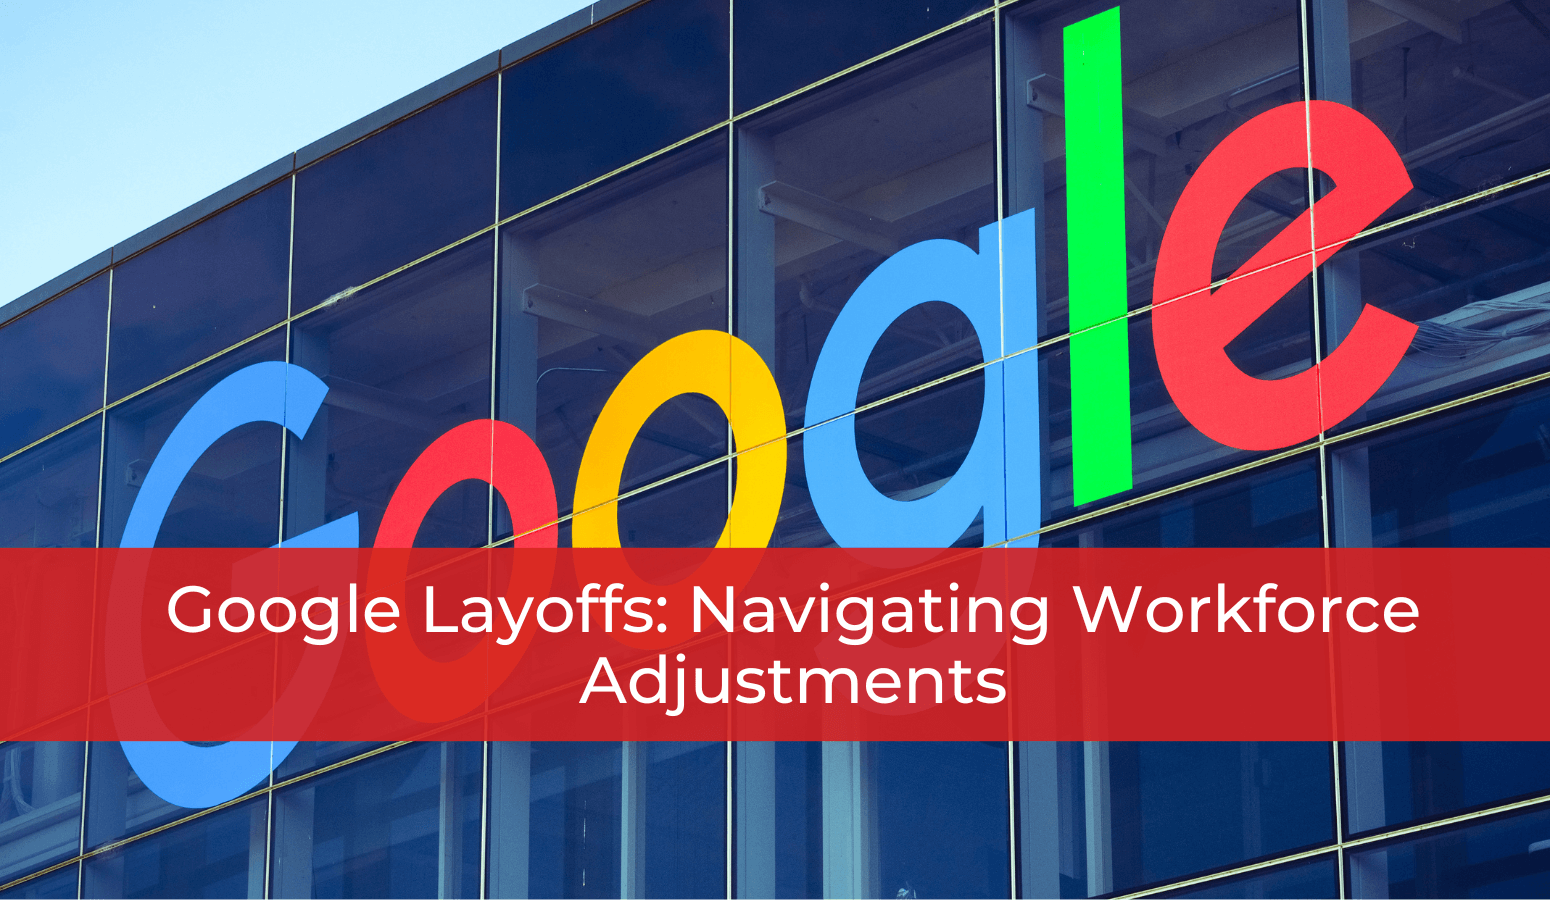 Featured image for “Google Layoffs: Navigating Workforce Adjustments”